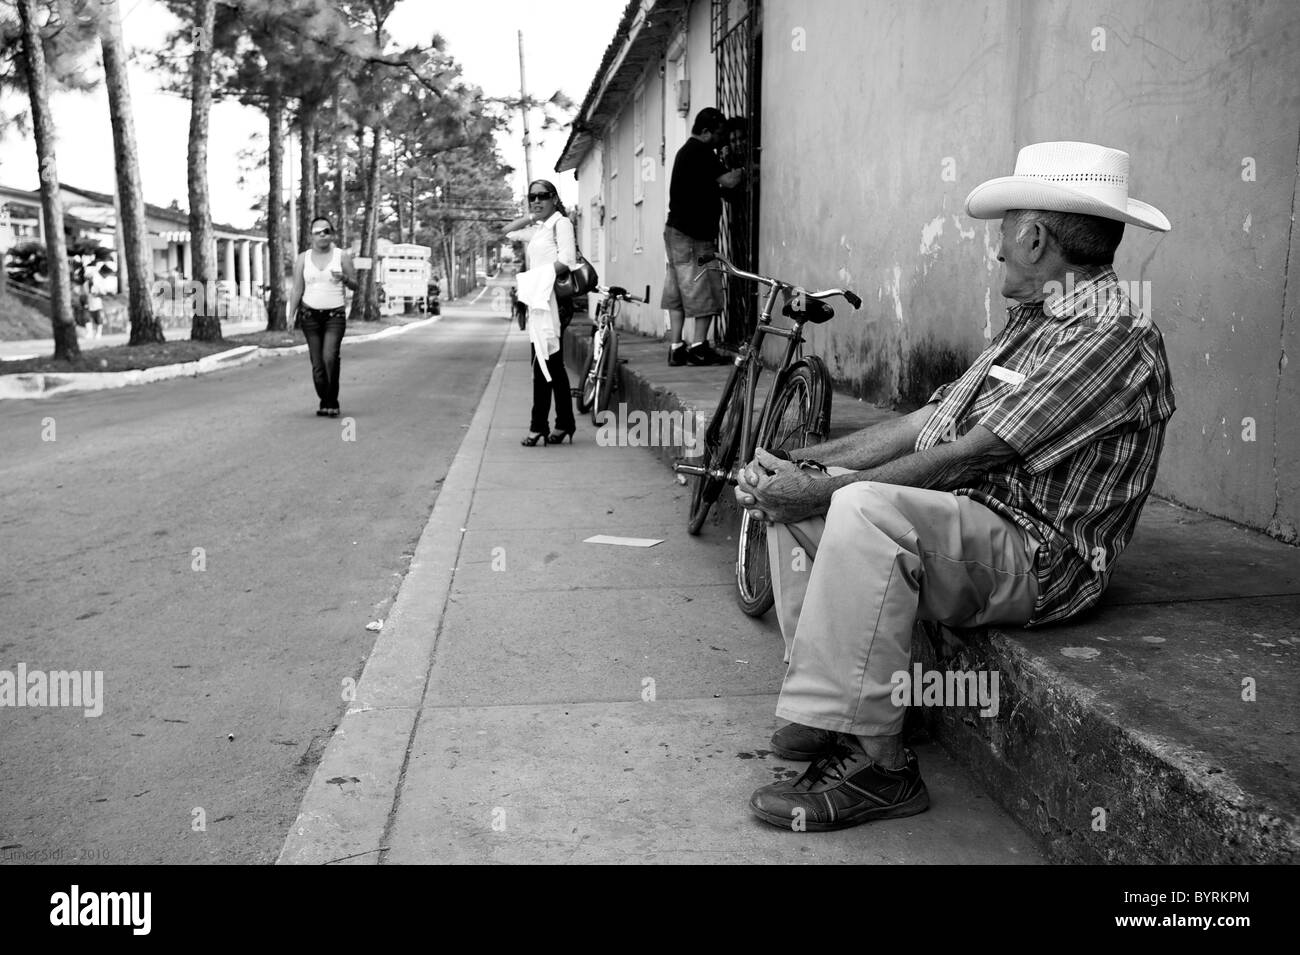 Street photography of Cuba. Stock Photo